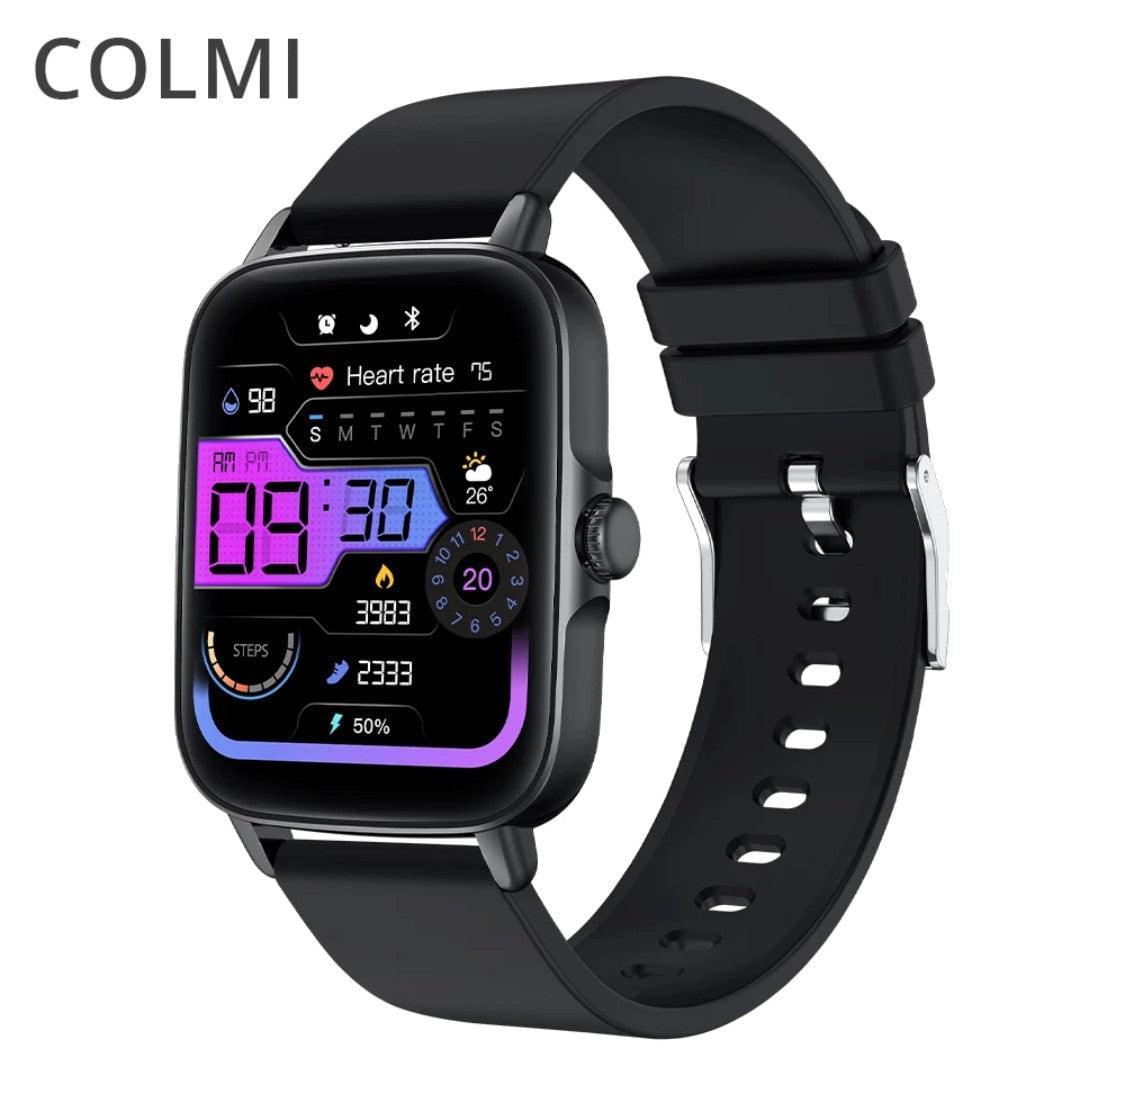 Colmi P28 Smart Watch Pink Smart Watch South Africa